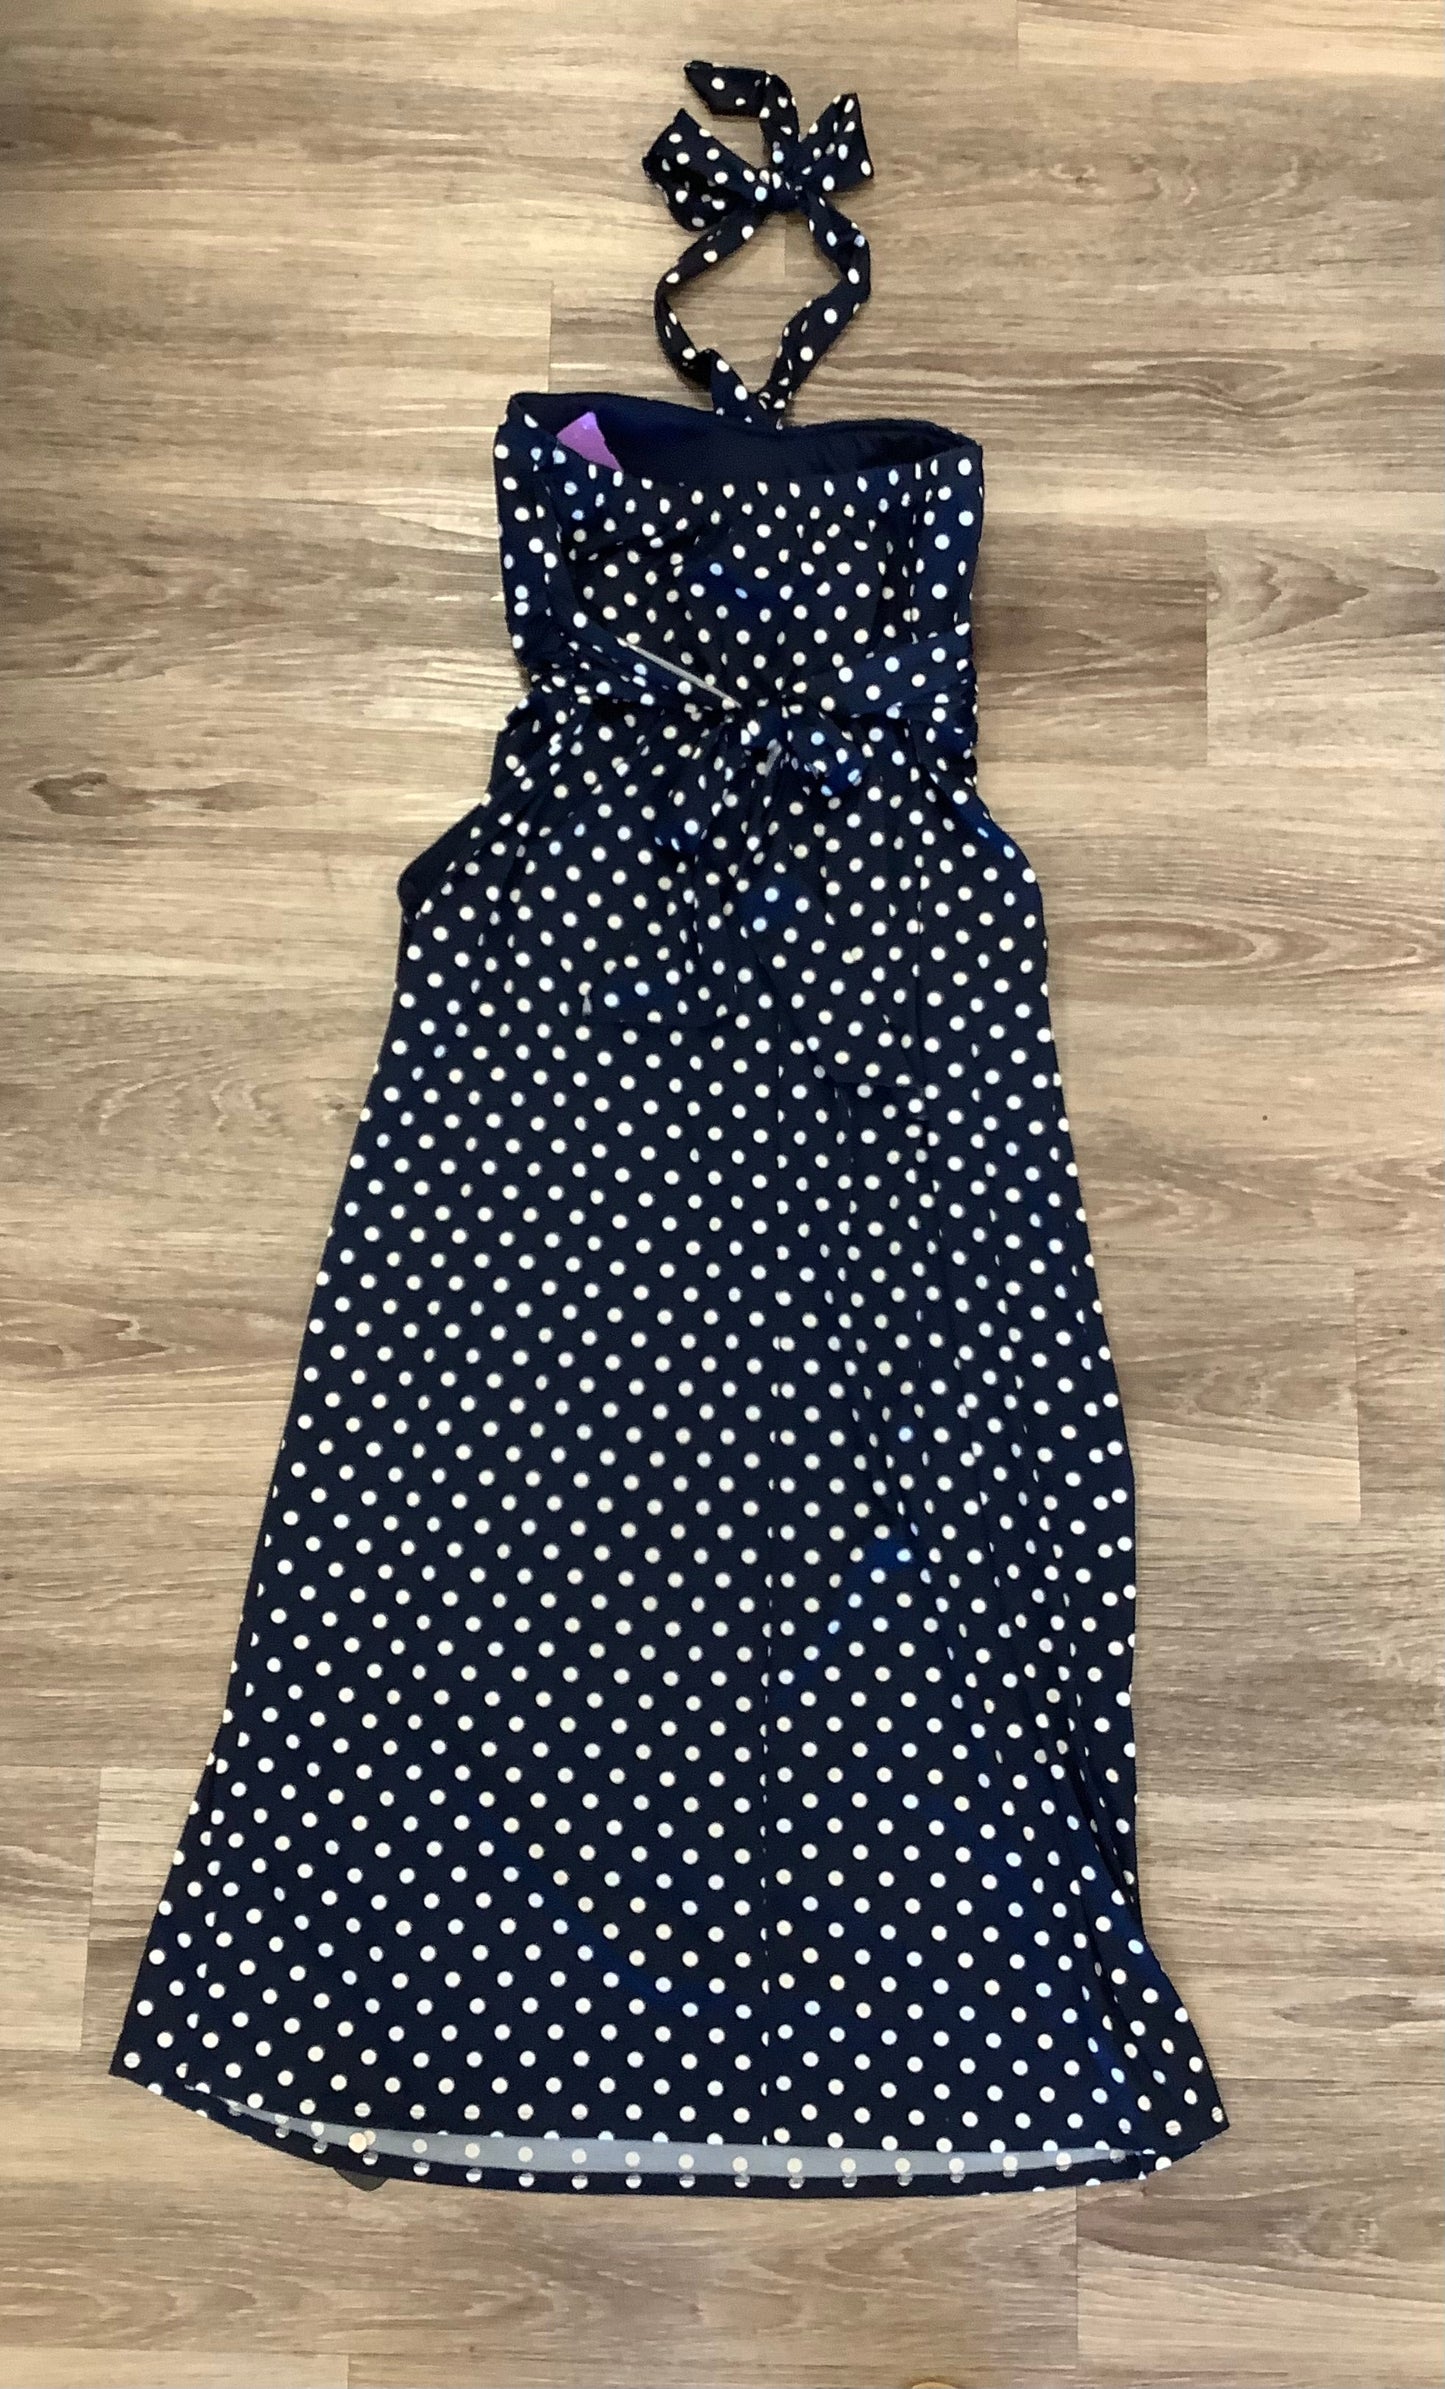 Polkadot Pattern Dress Casual Maxi Clothes Mentor, Size 1x